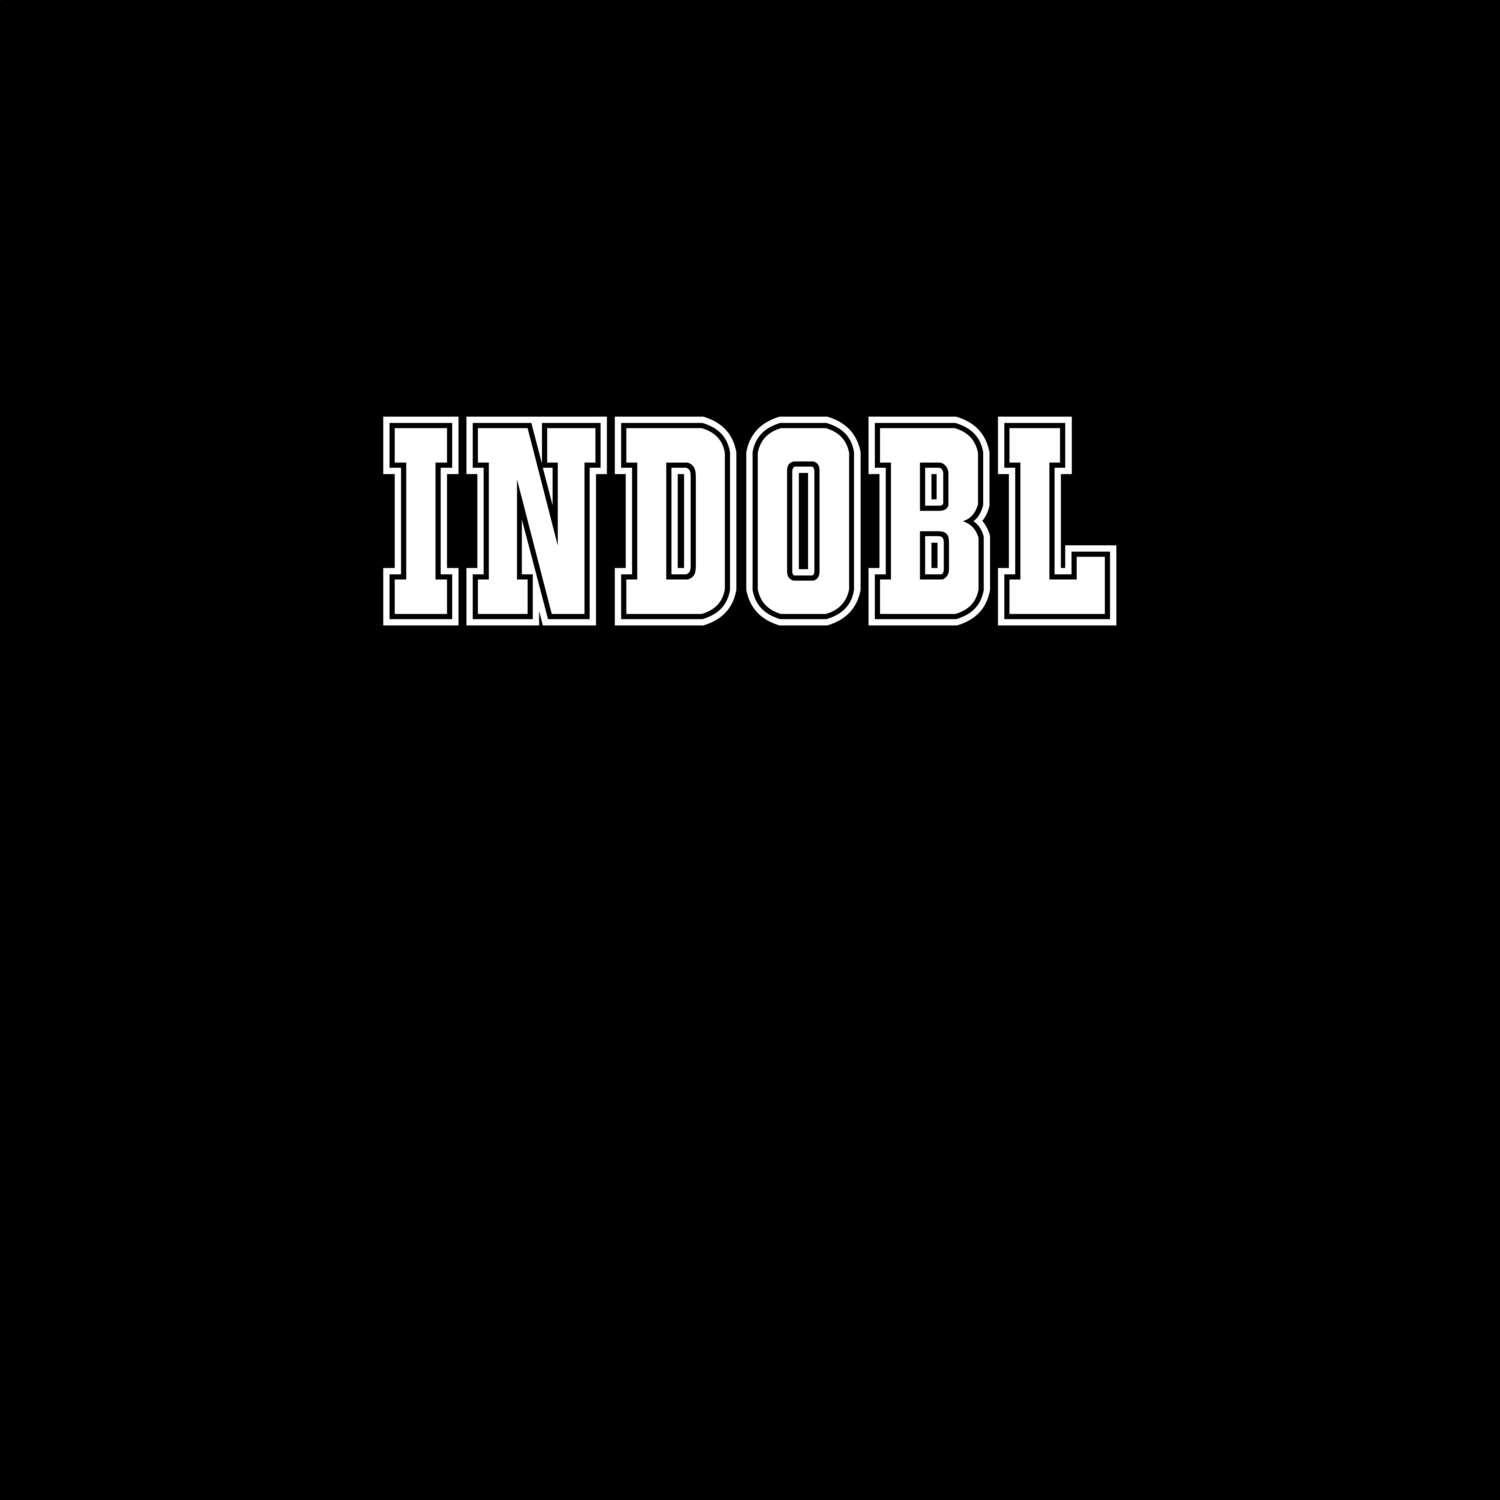 Indobl T-Shirt »Classic«